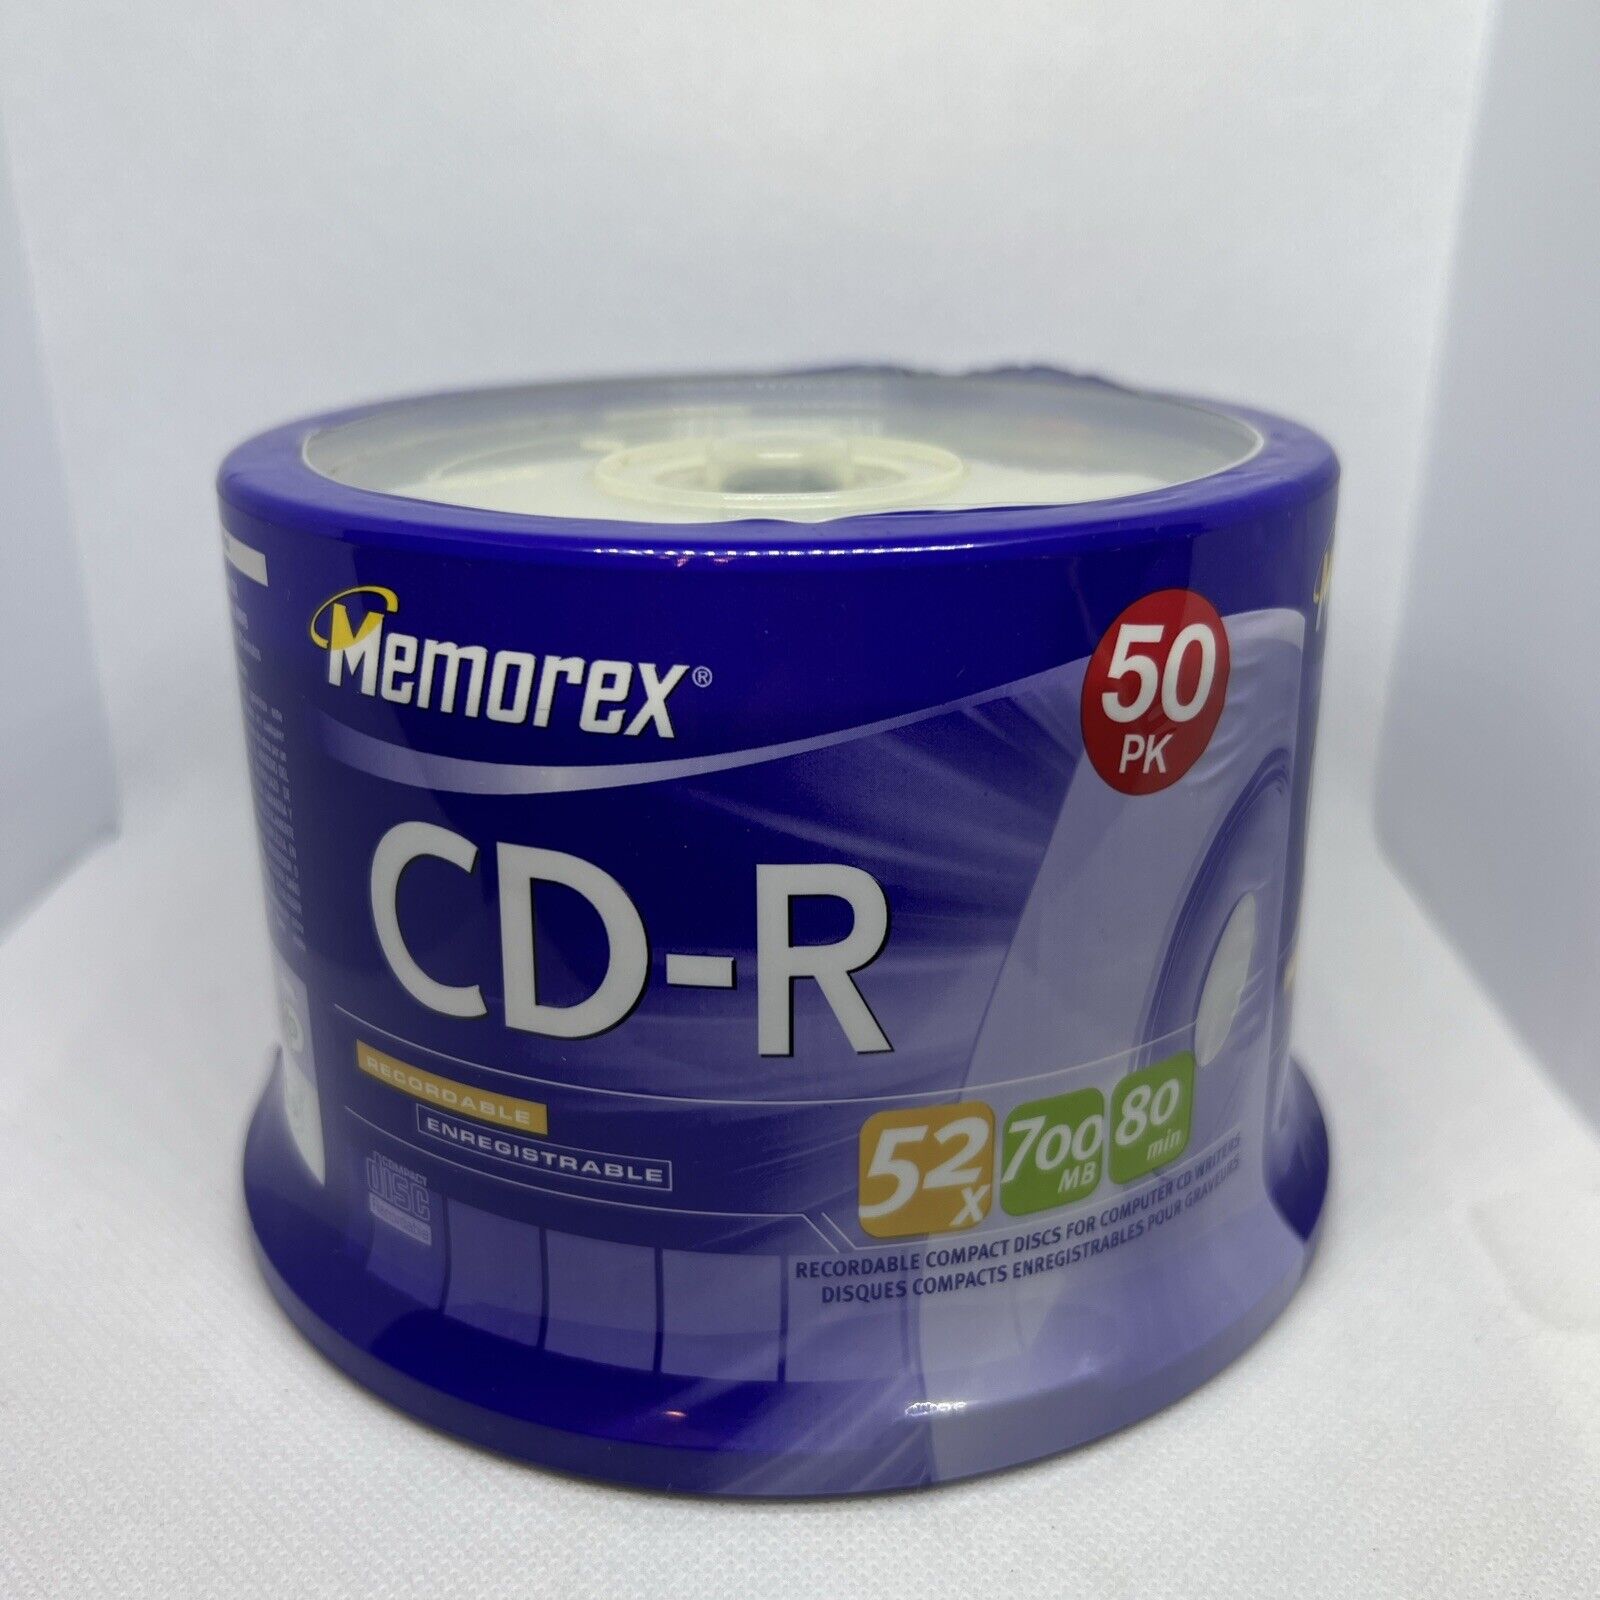 Blank CD Music CD-R 50 PK 52X 700MB 80min NEW Sealed By Memorex